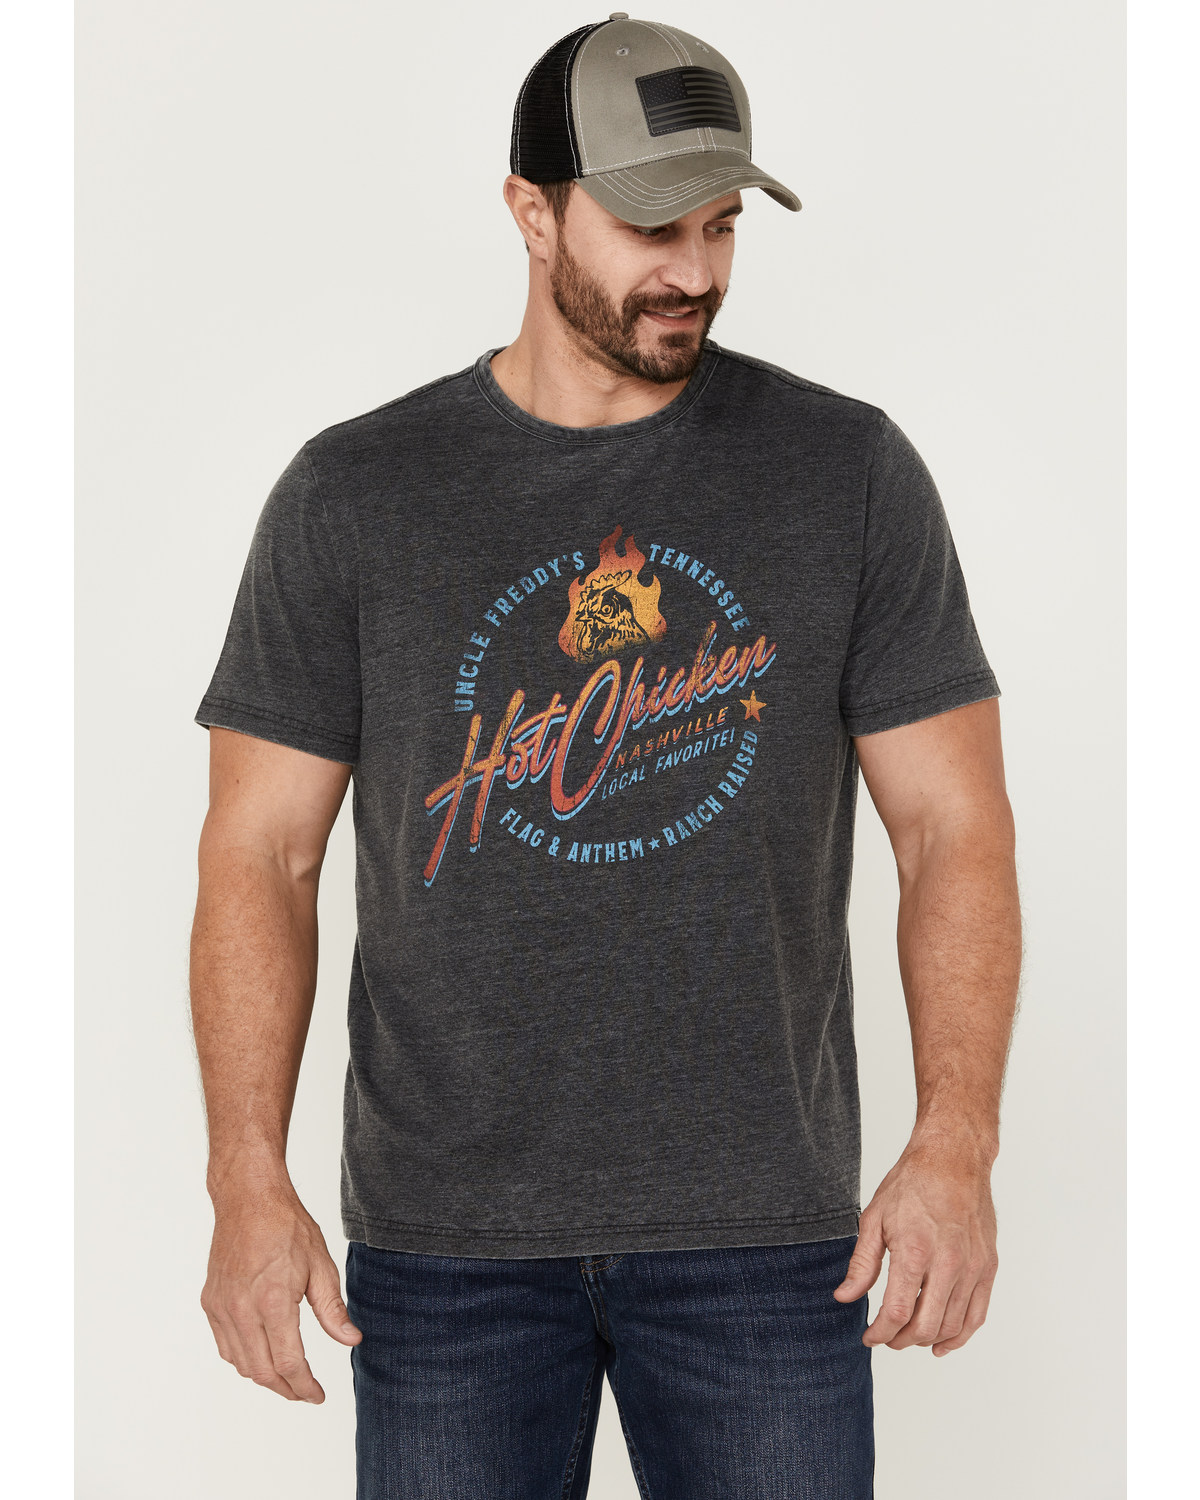 Flag & Anthem Men's Hot Chicken Nashville Burnout Graphic T-Shirt